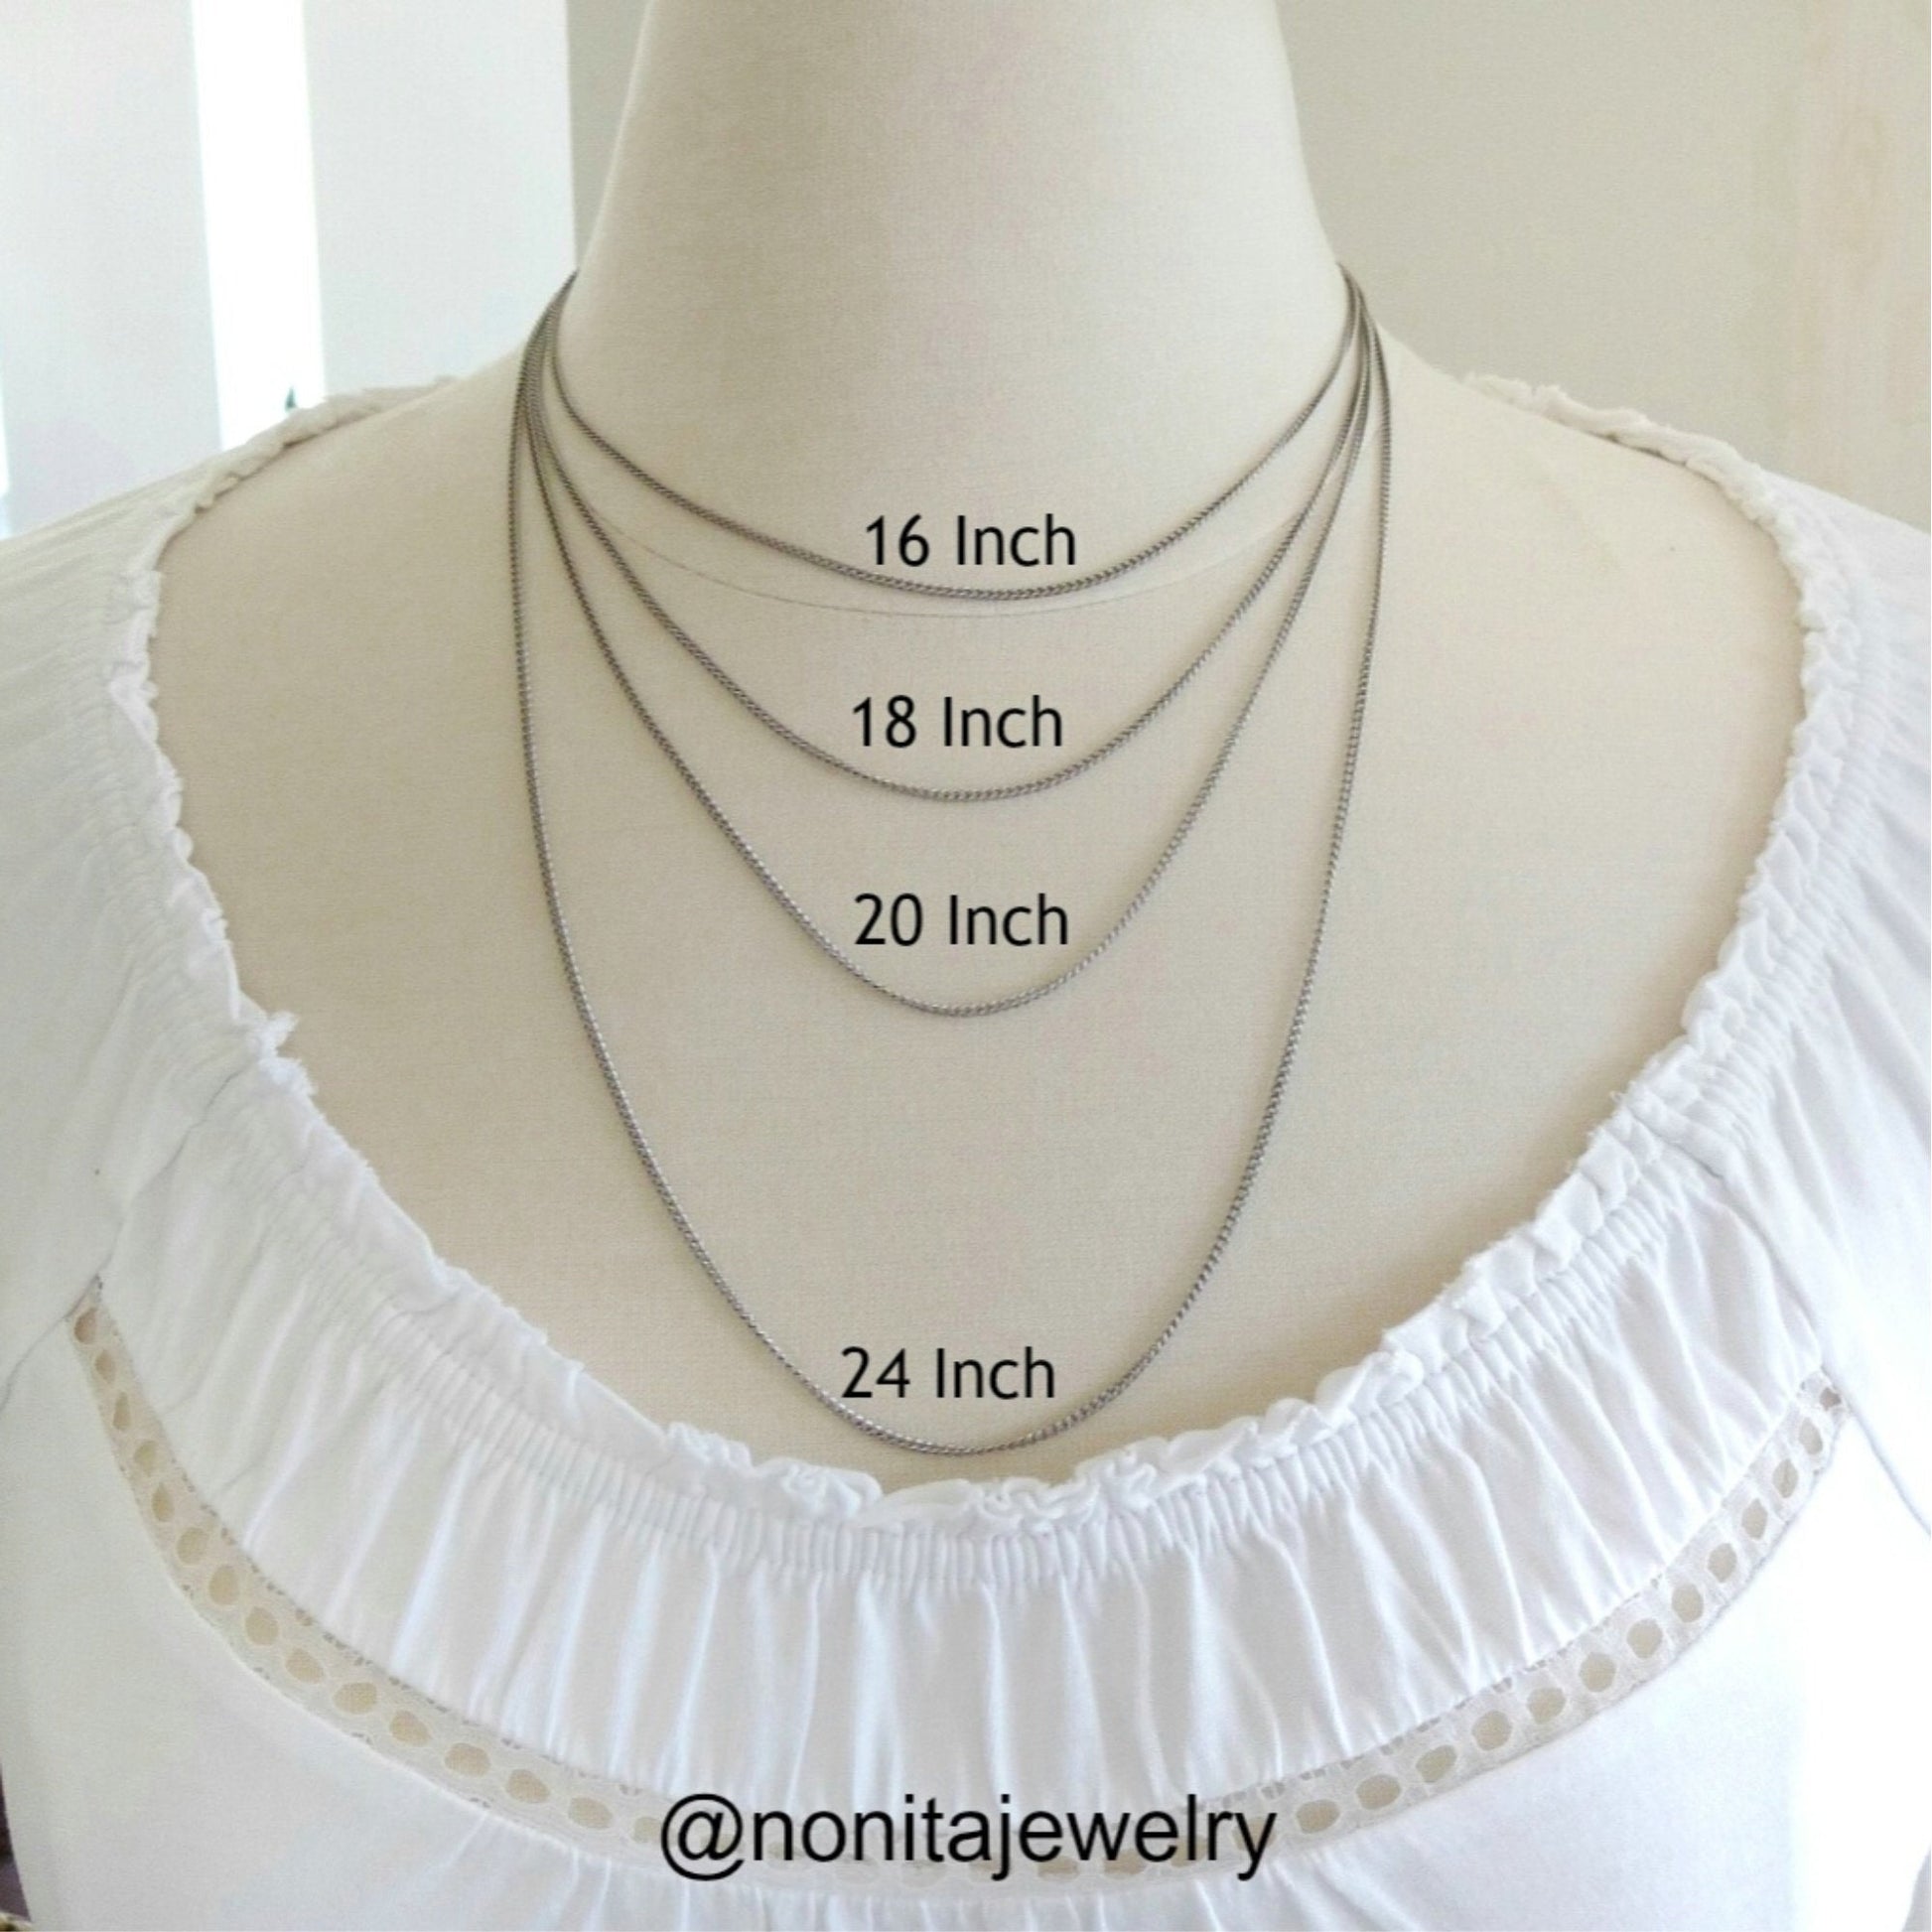 Single Gray Pearl Titanium Necklace, Freshwater Pearl Niobium Bridal Necklace, Hypoallergenic Nickel Free for Sensitive Skin